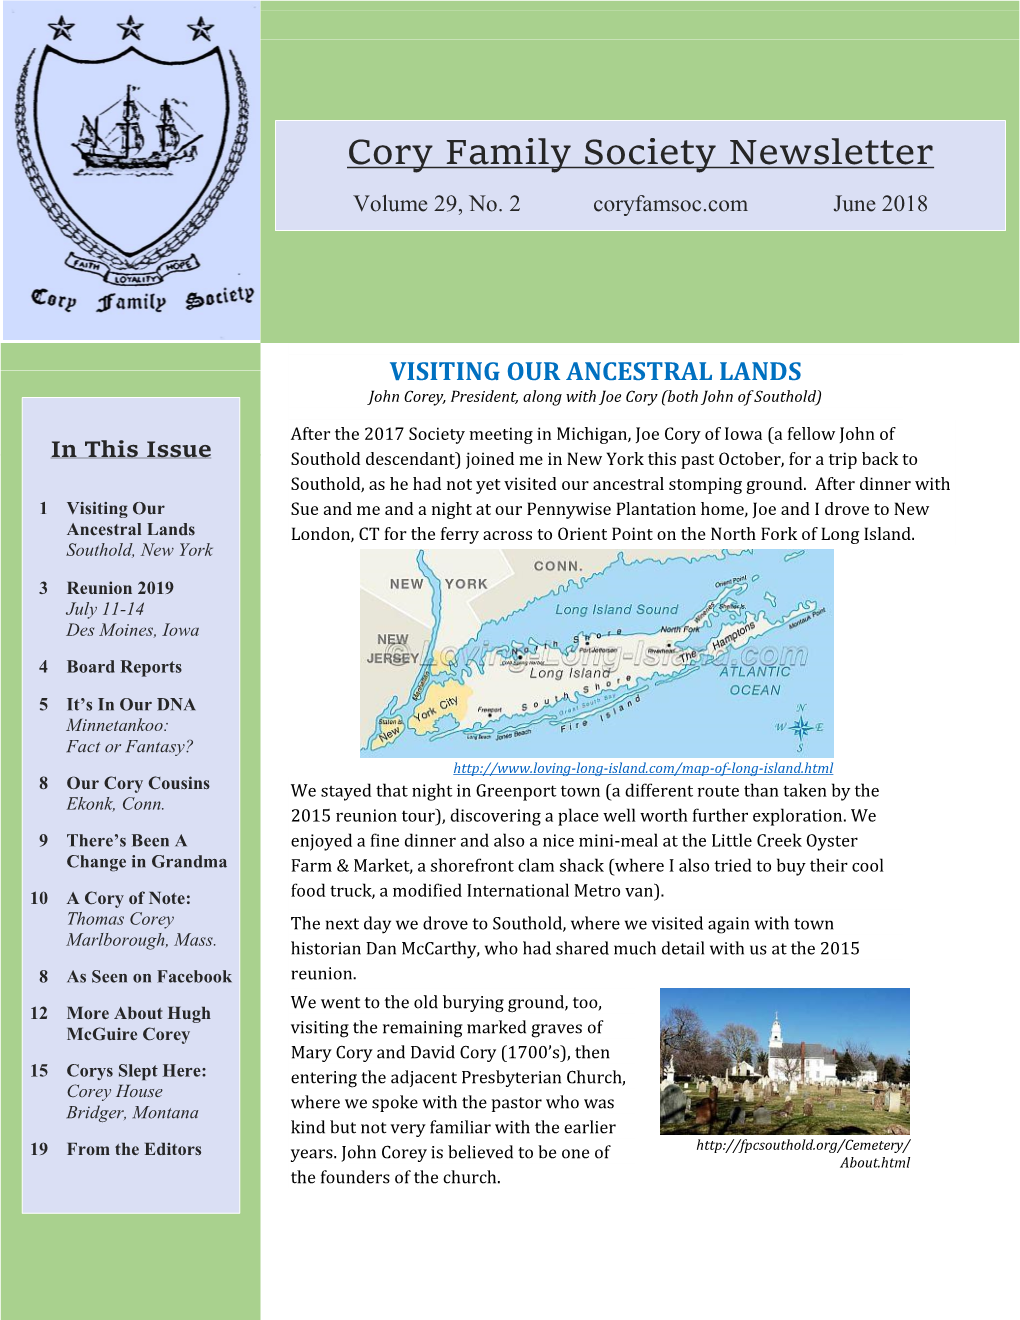 Cory Family Society Newsletter Volume 29, No